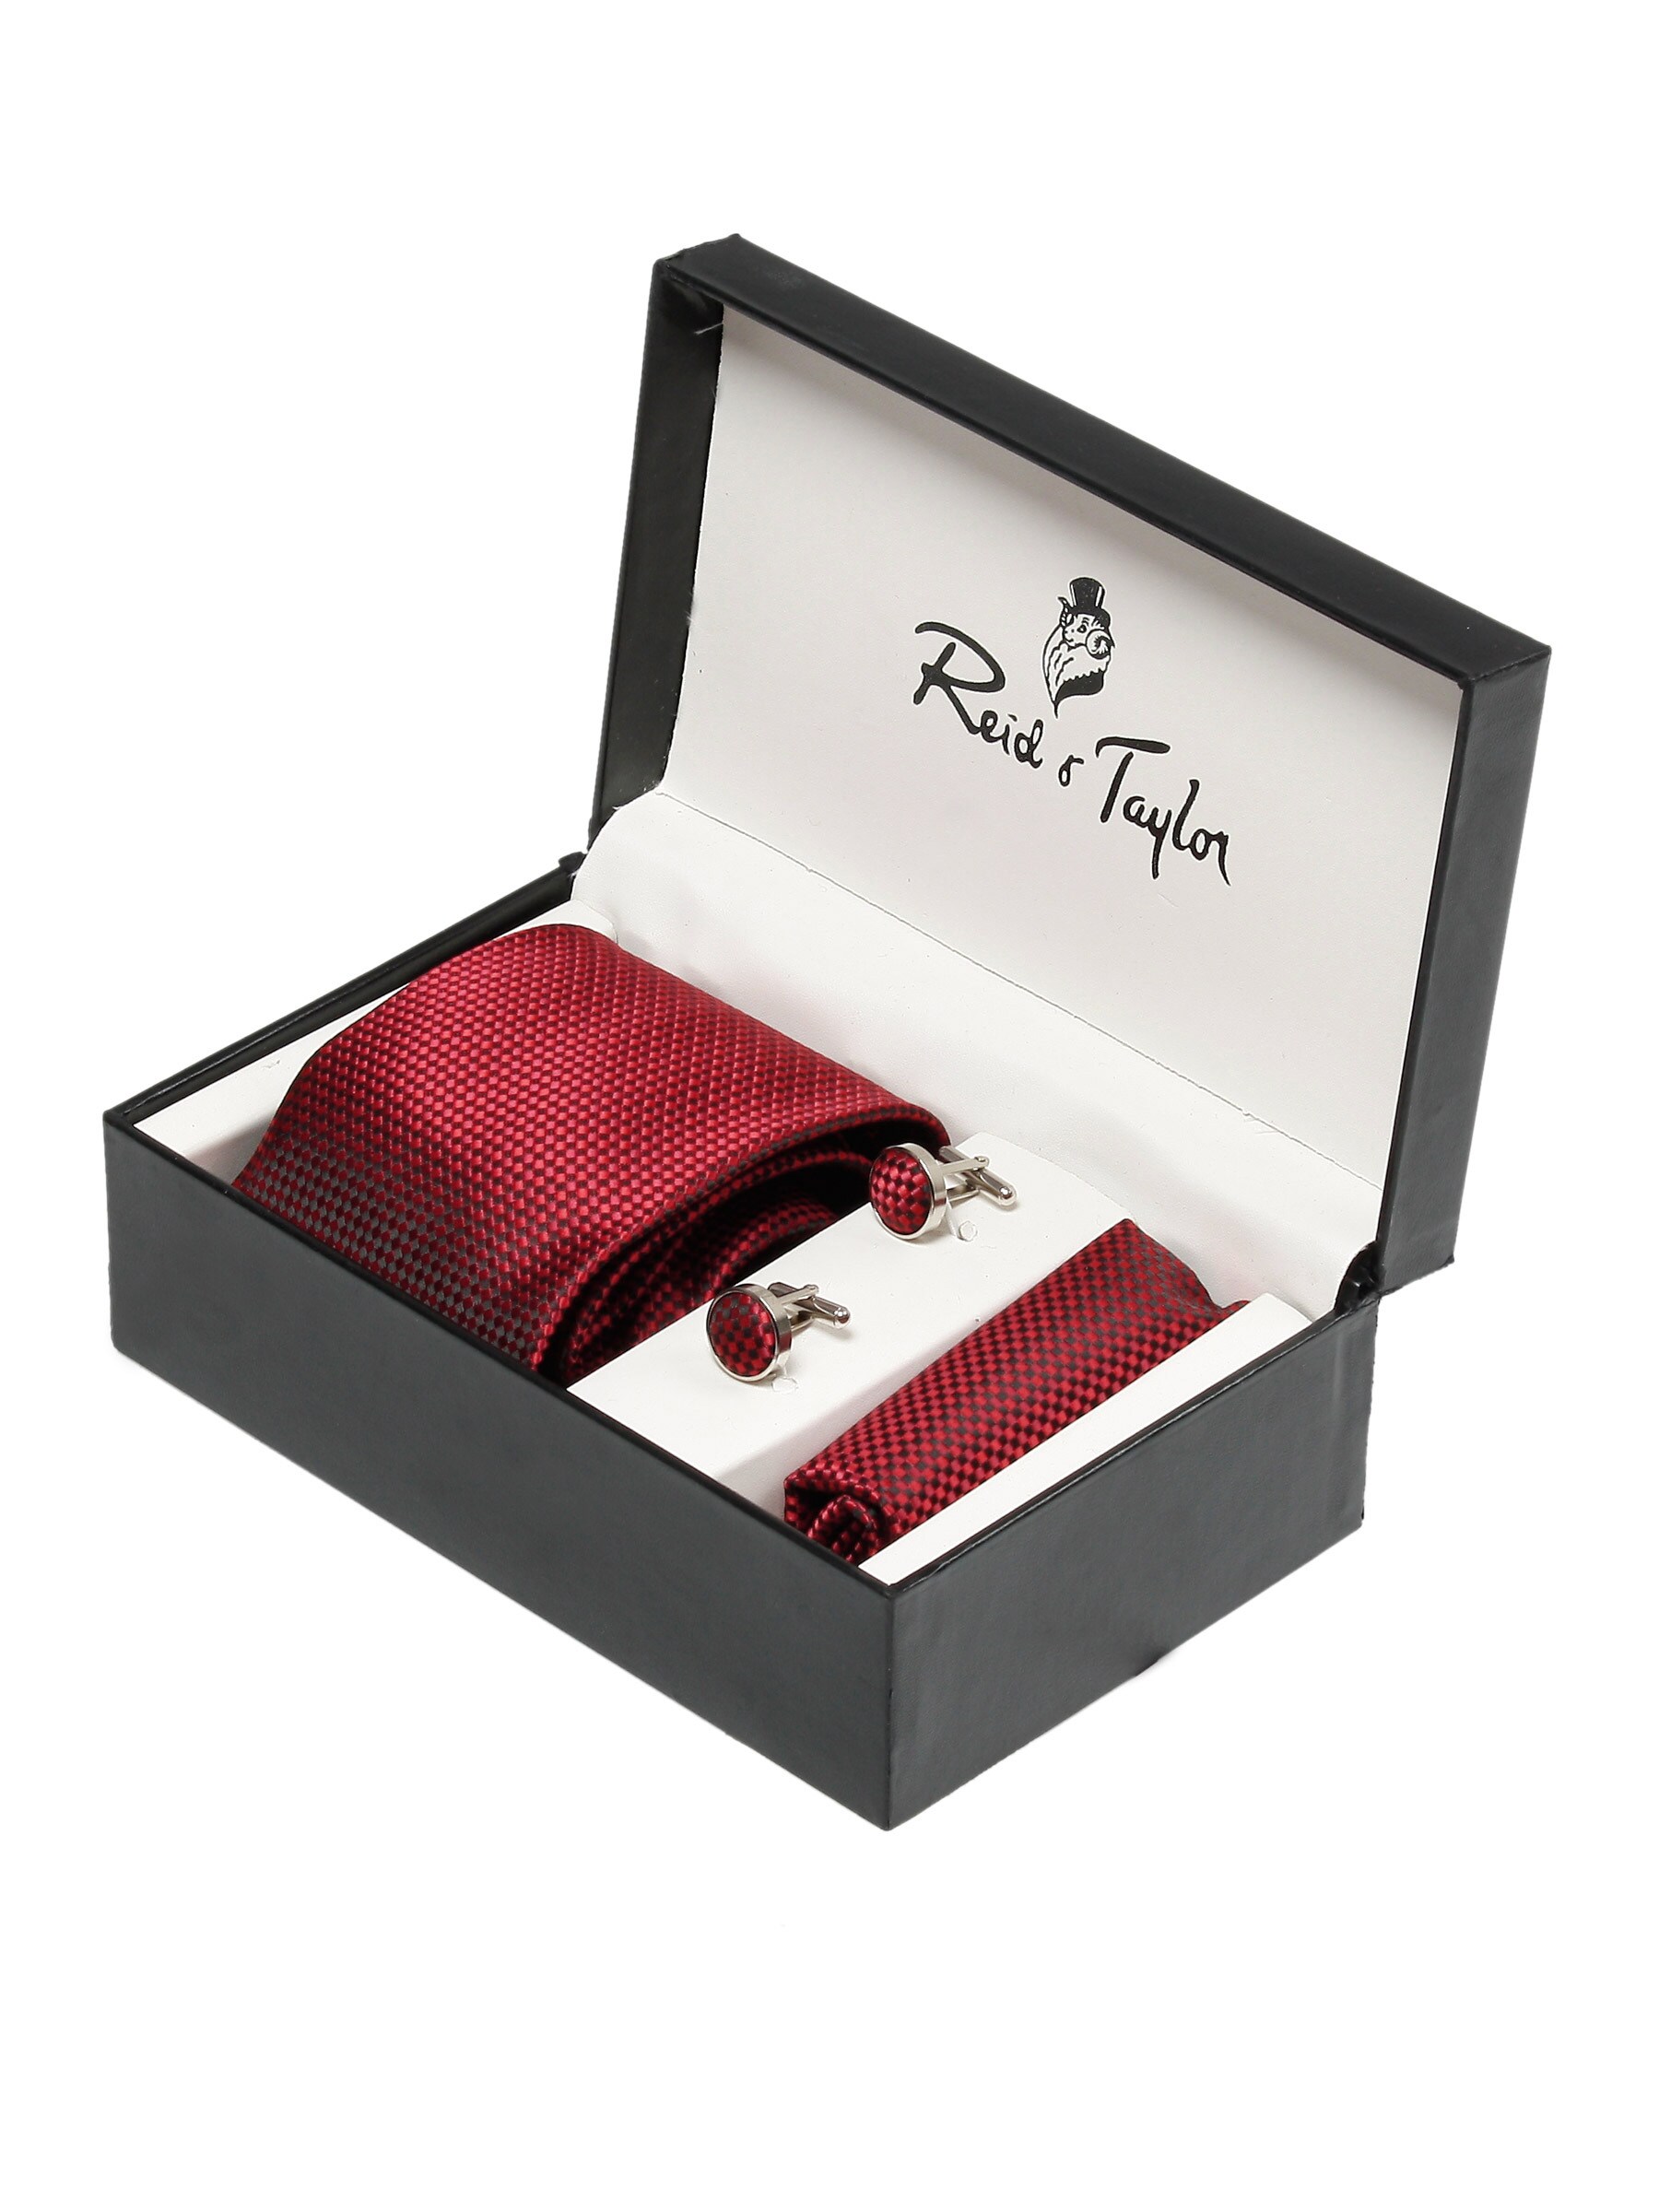 Reid & Taylor Men Formal Maroon Tie+Cufflink+Pocket square - Combo Pack